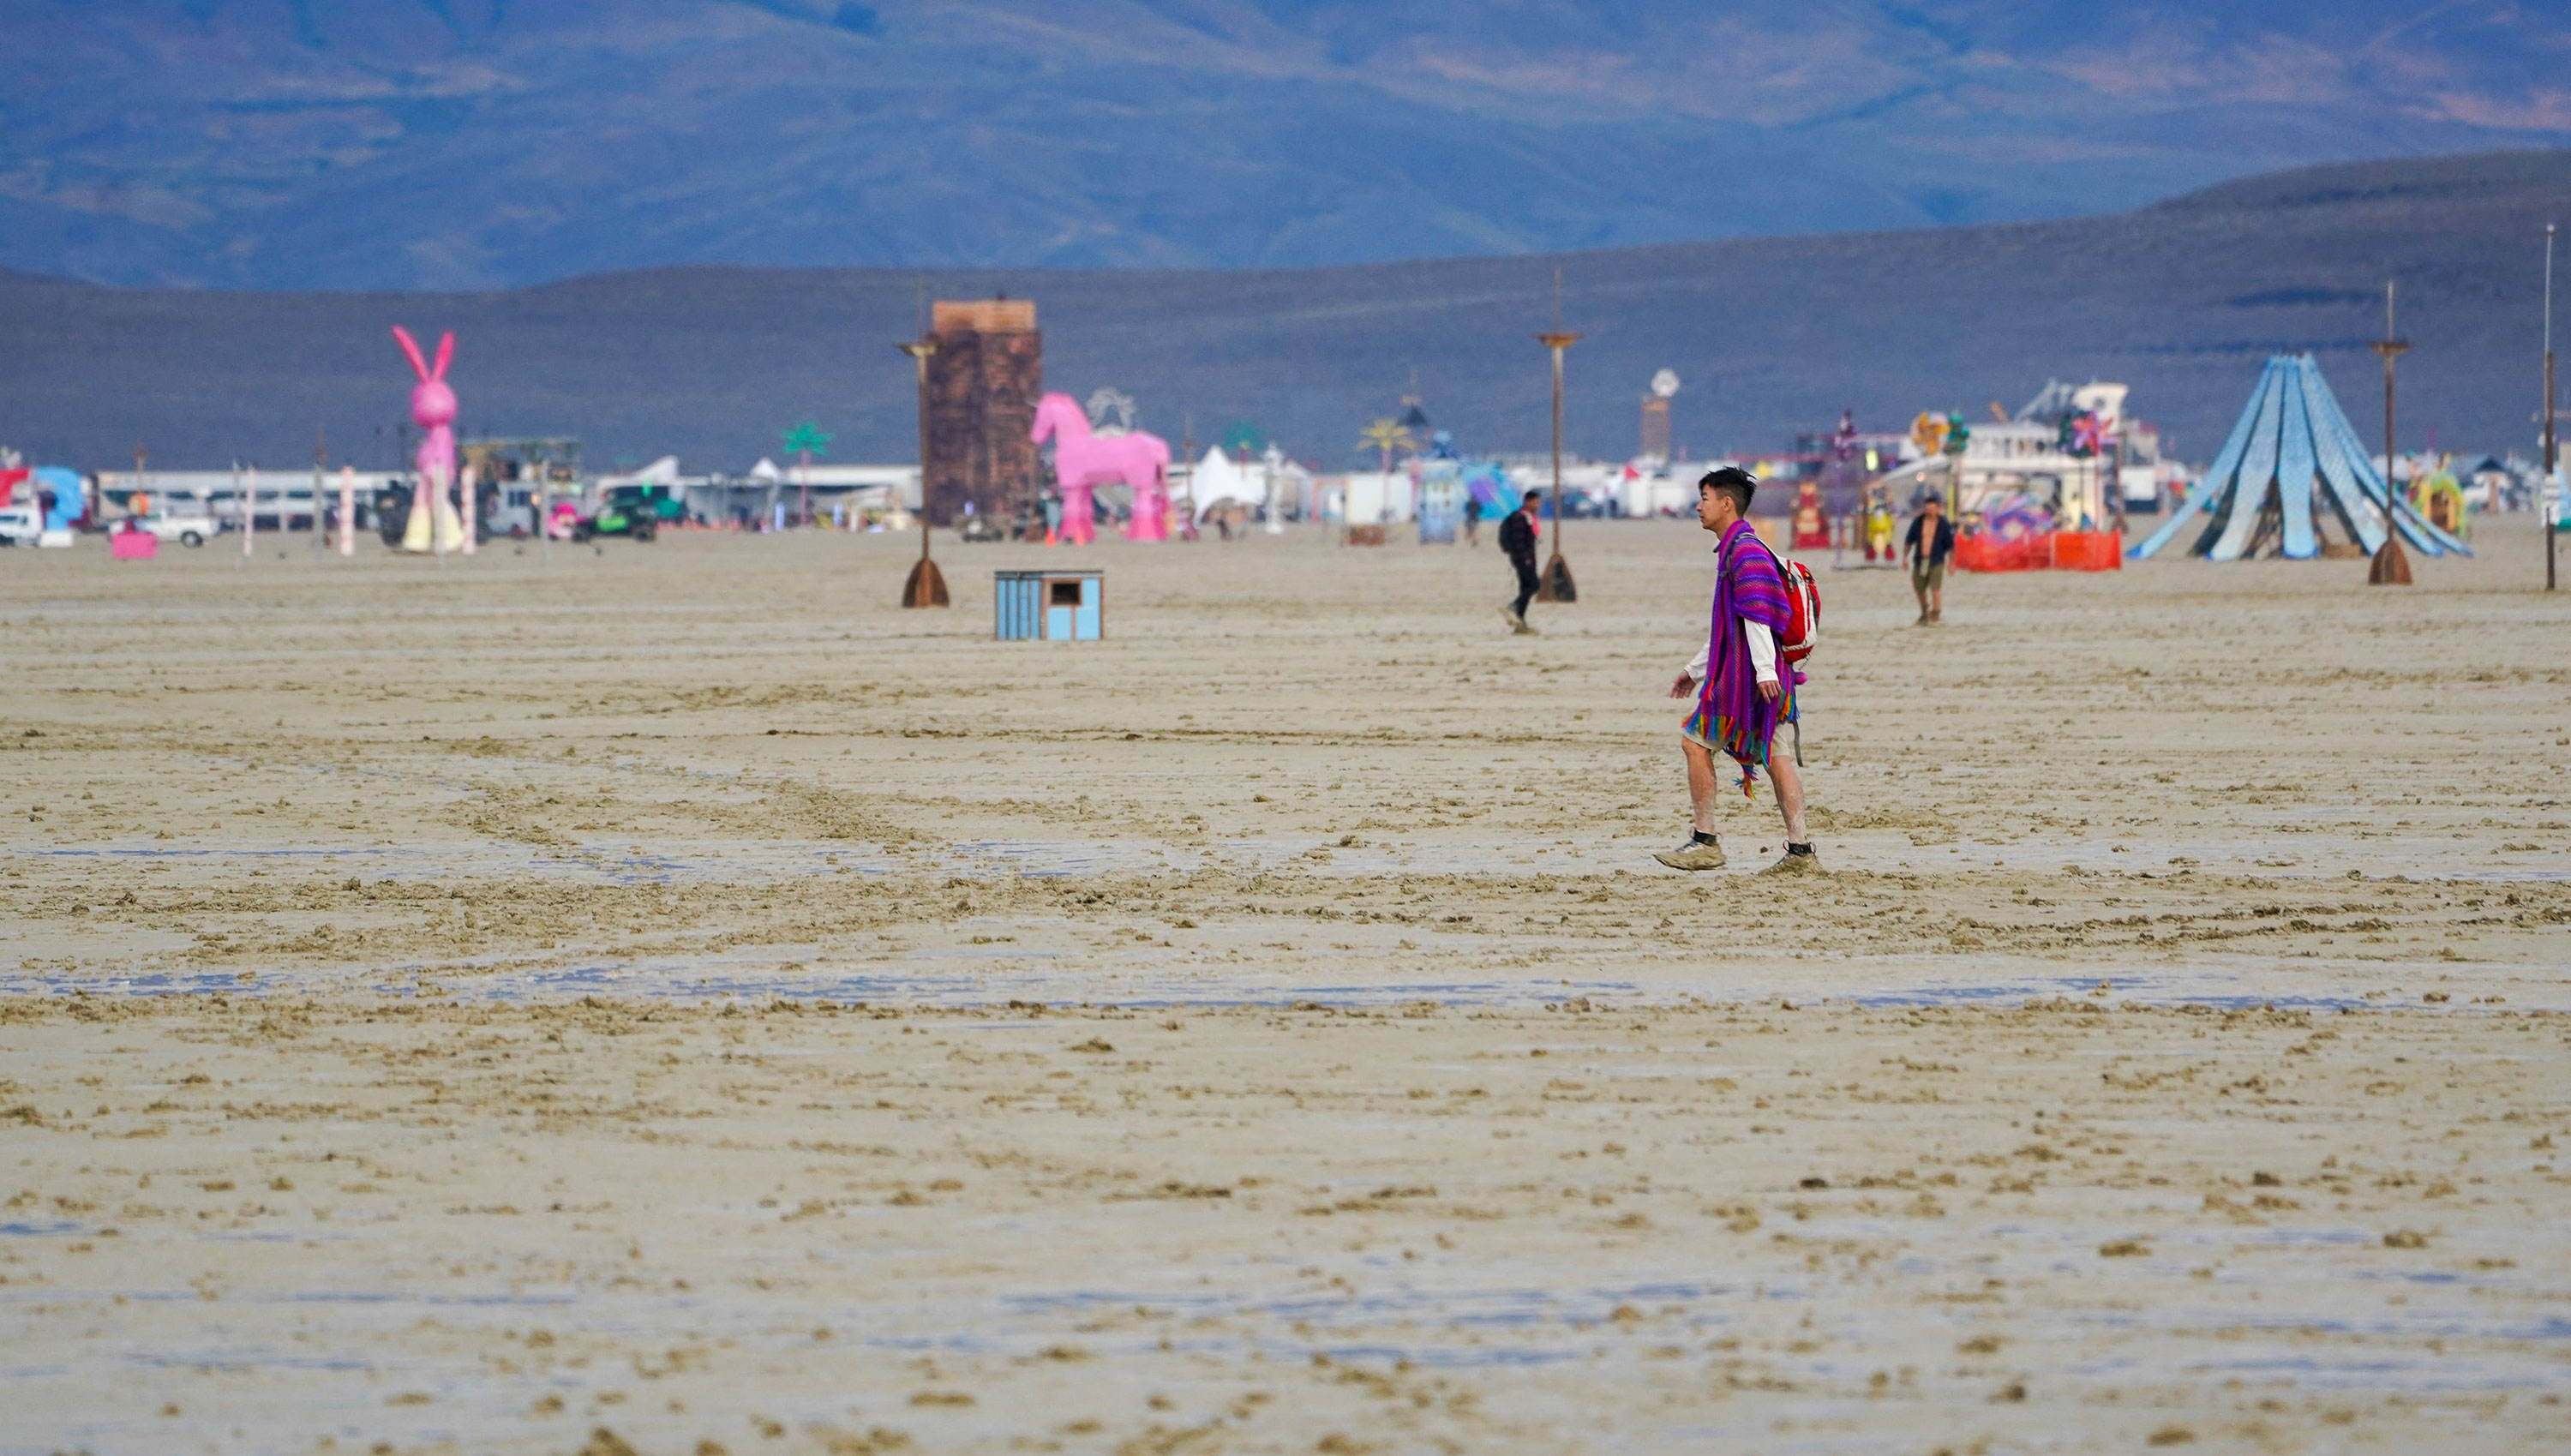 A festival attendee walks through mud at Burning Man on September 2, in Black Rock Desert, Nevada. 